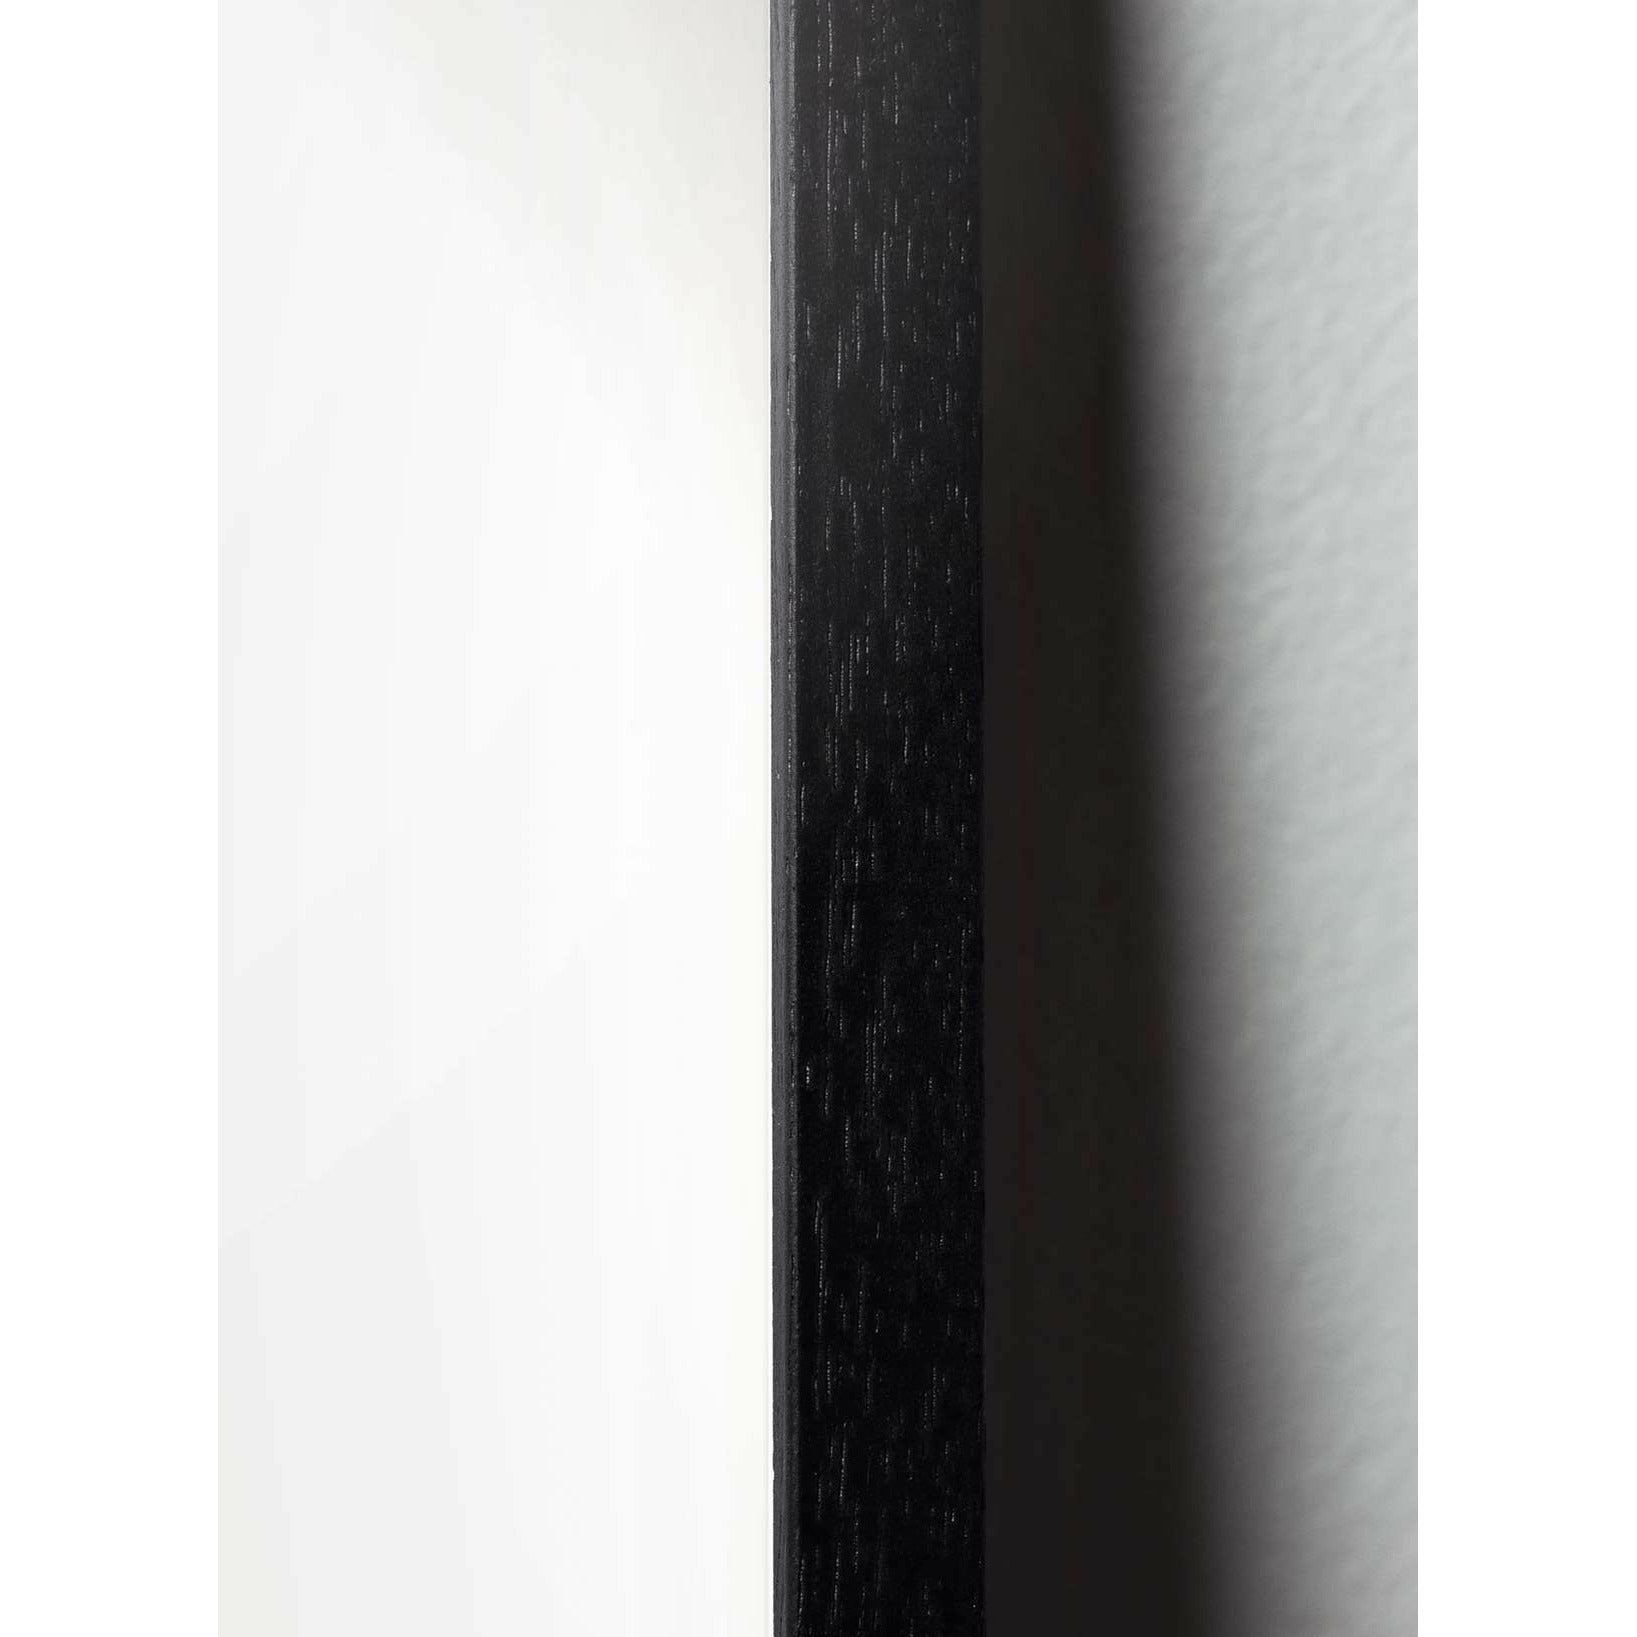 Brainchild Vinter bra klassisk affisch, ram i svart -målat trä 50x70 cm, mörkblå bakgrund